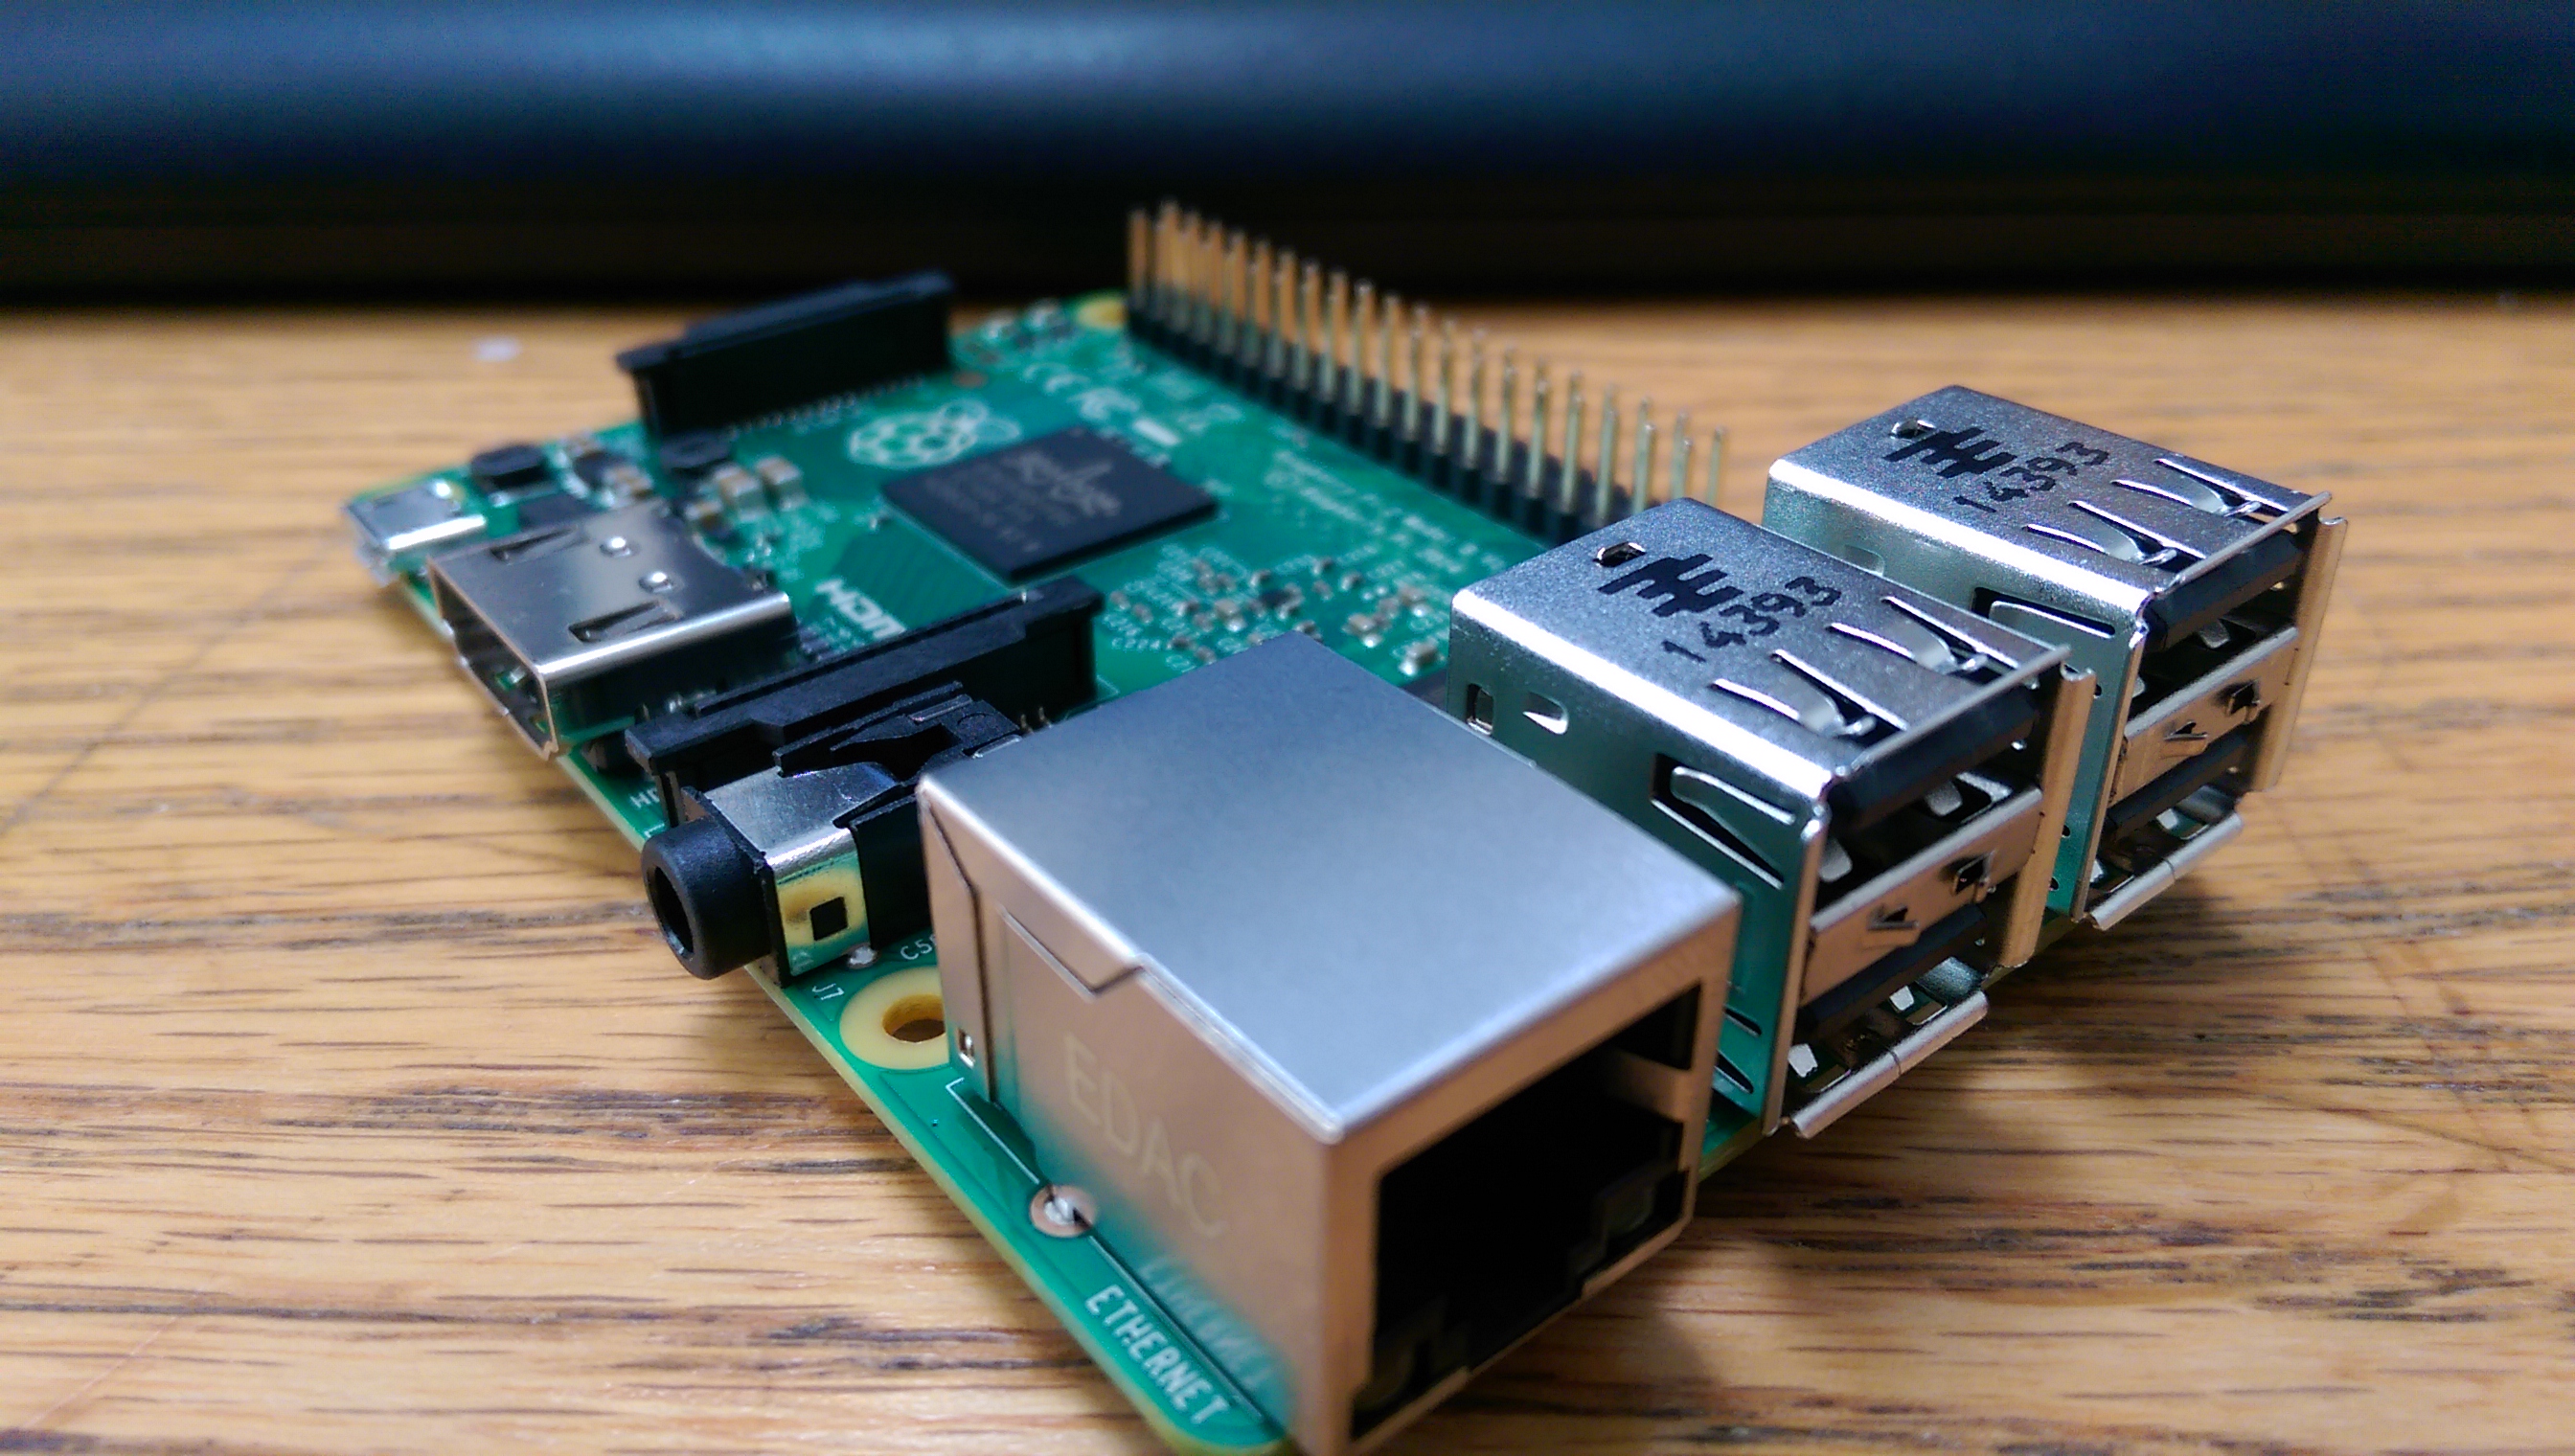 Raspberry Pi 2 Model B 1GB